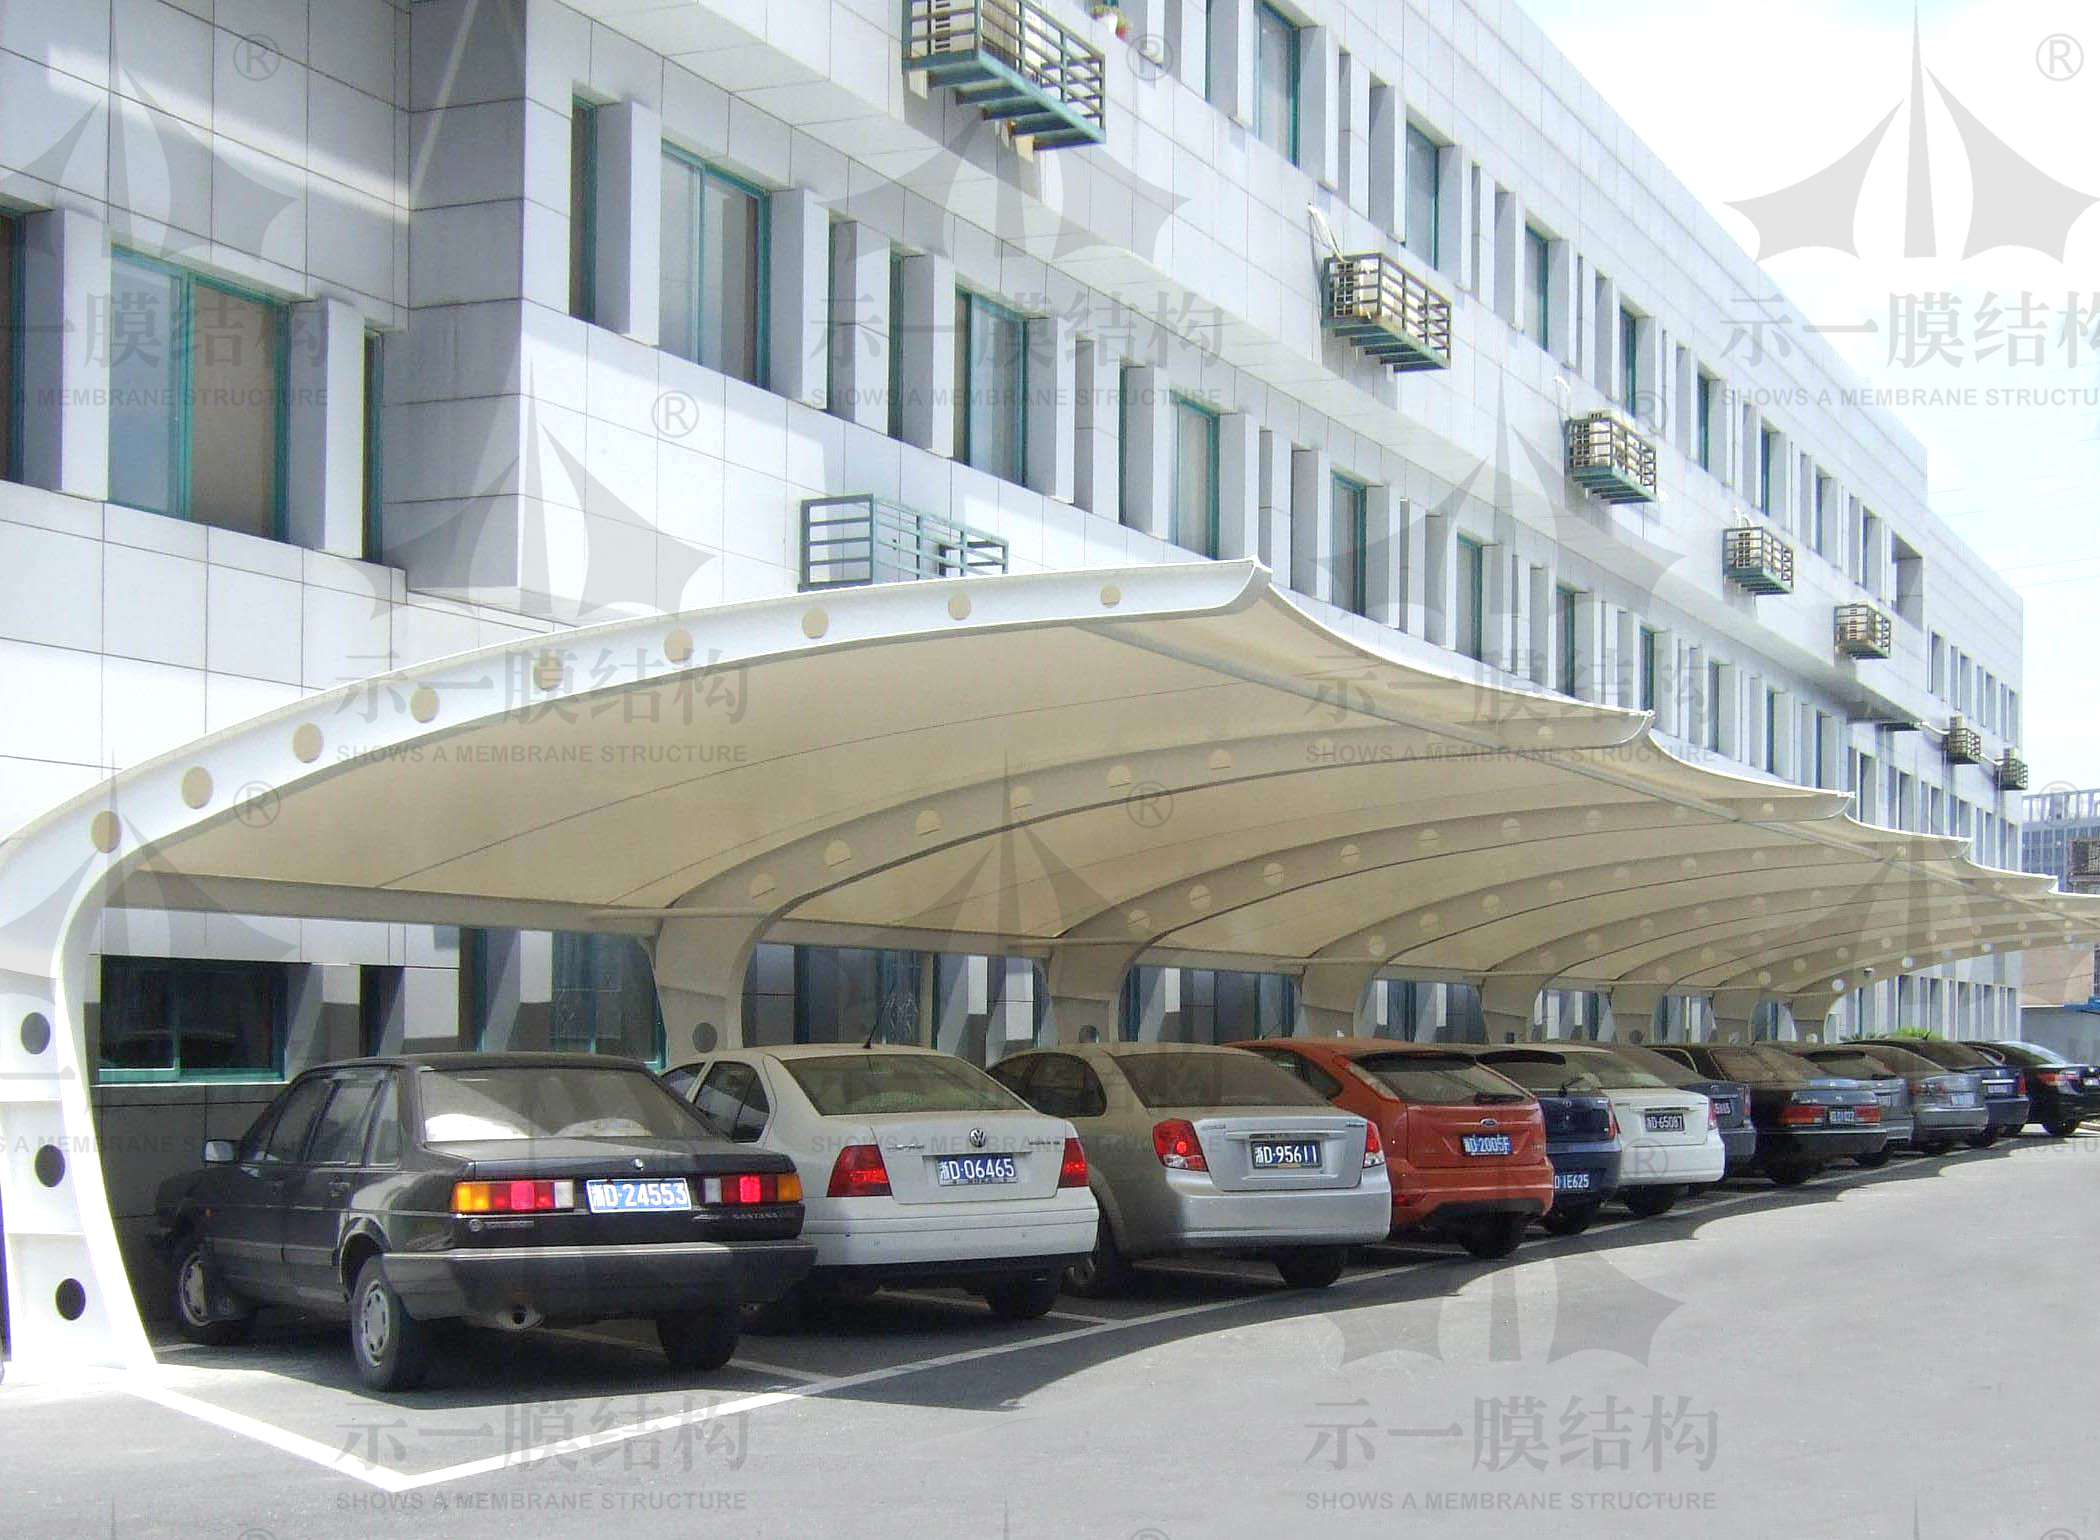 Shanghai SHOWS A Membrane Structure Parking Shed-Qizi Beam